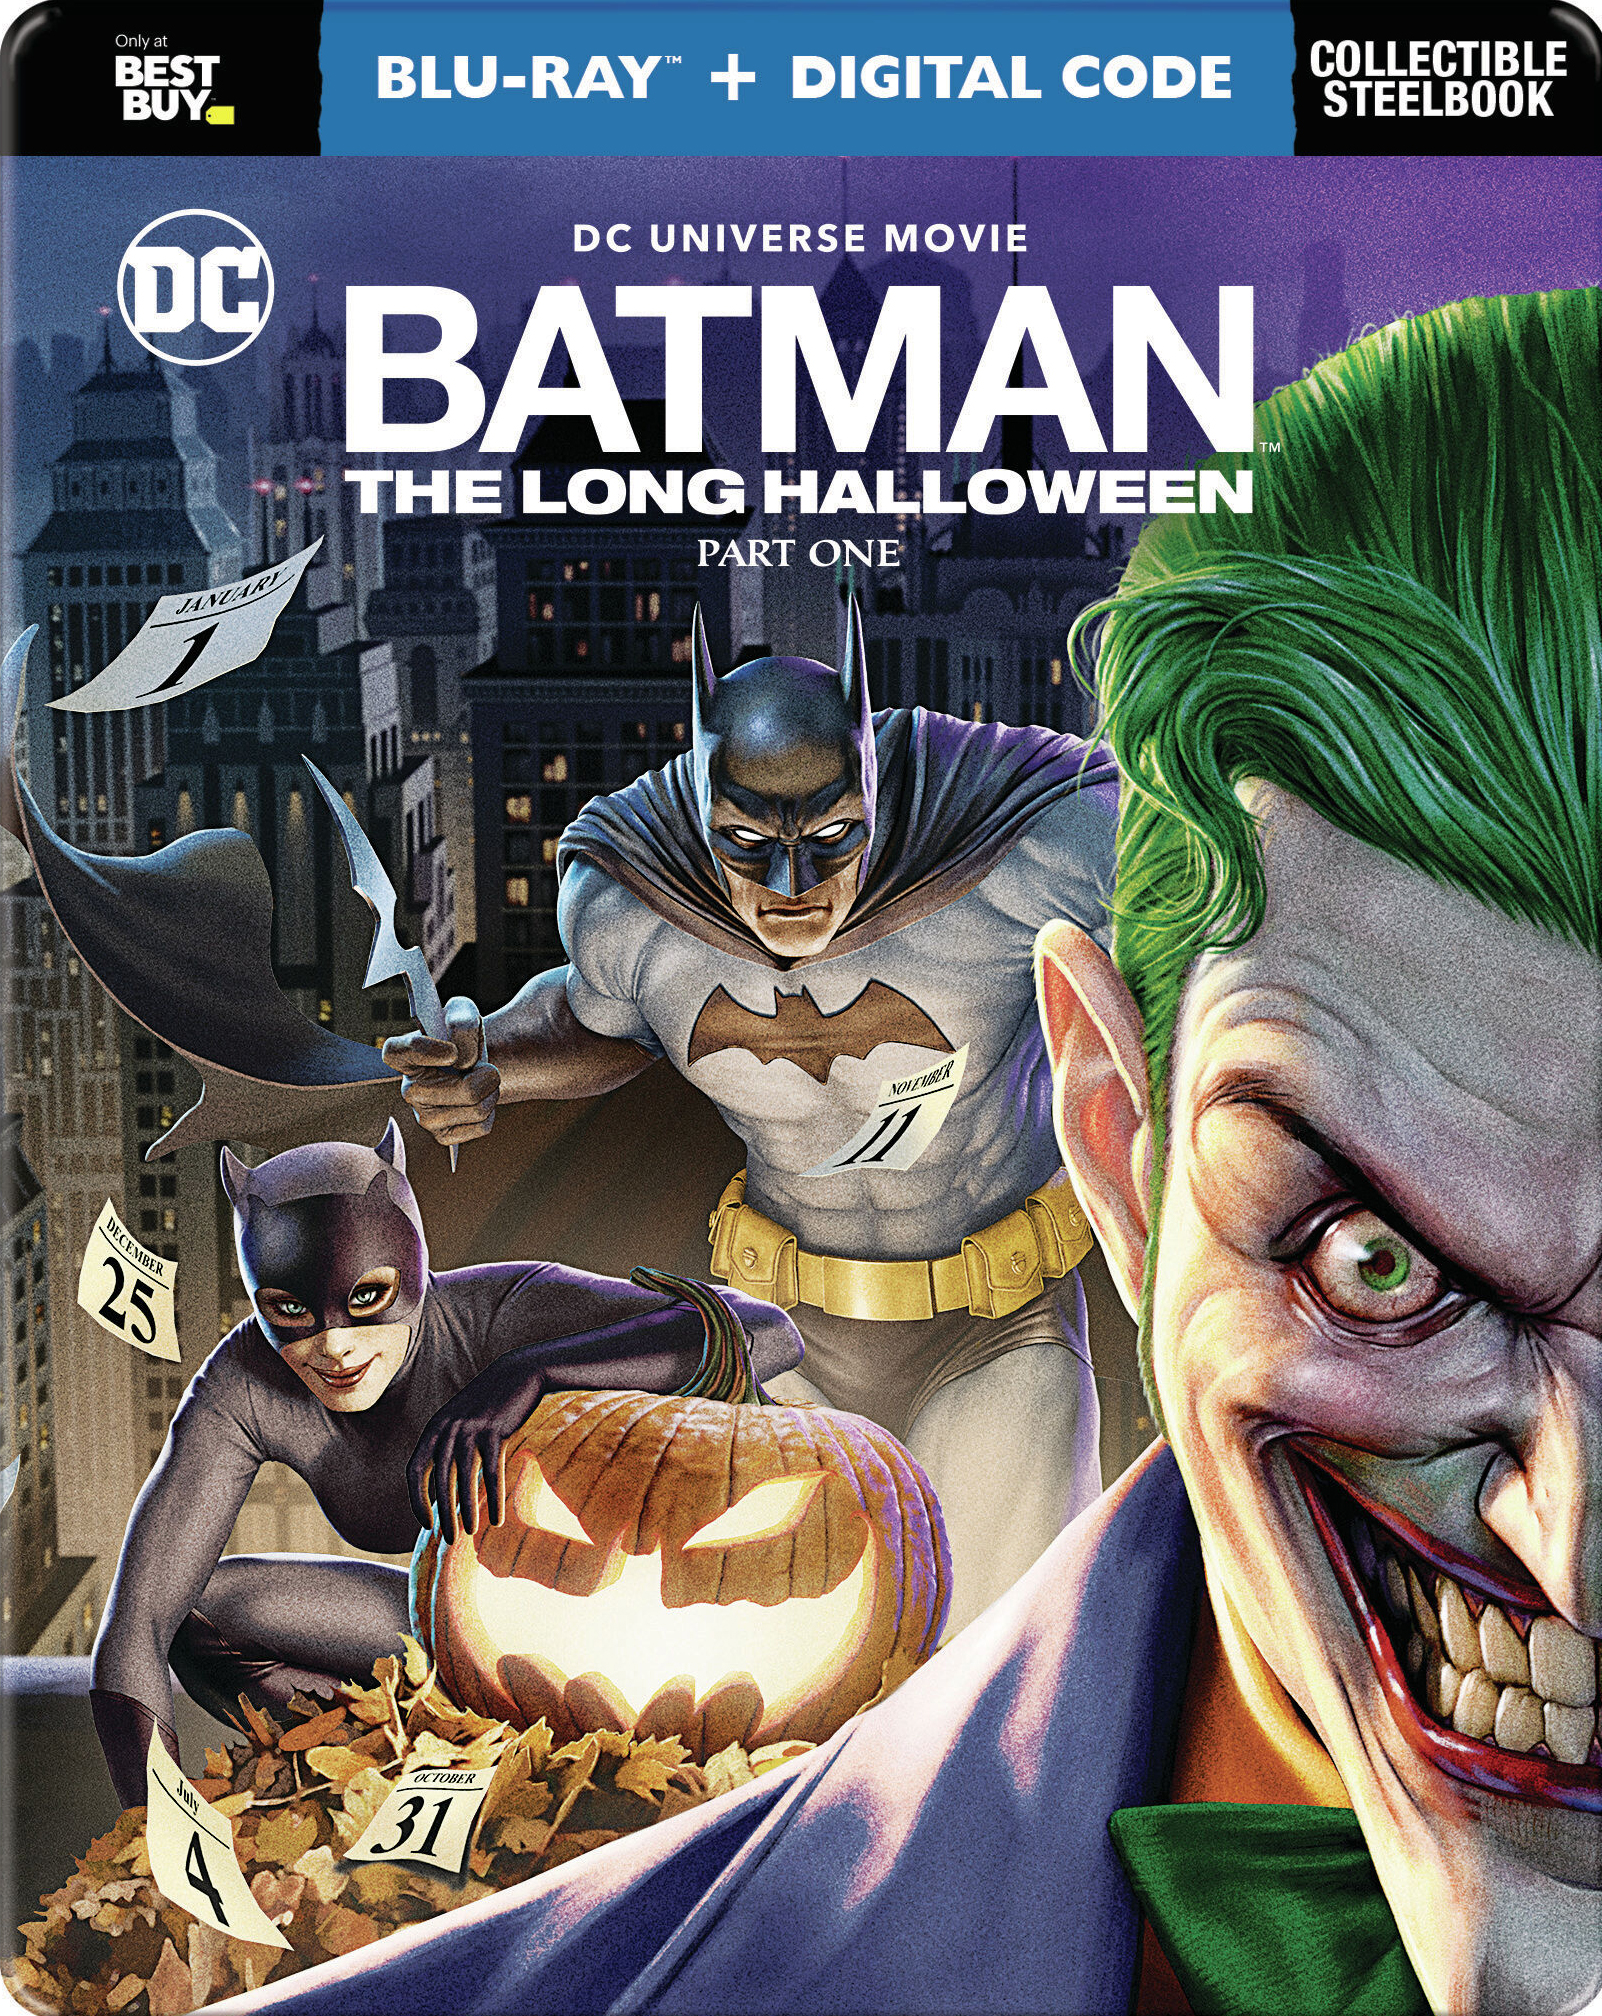 Batman: The Long Halloween Part One [SteelBook] [Digital Copy] [Blu-ray]  [Only @ Best Buy] [2021] - Best Buy